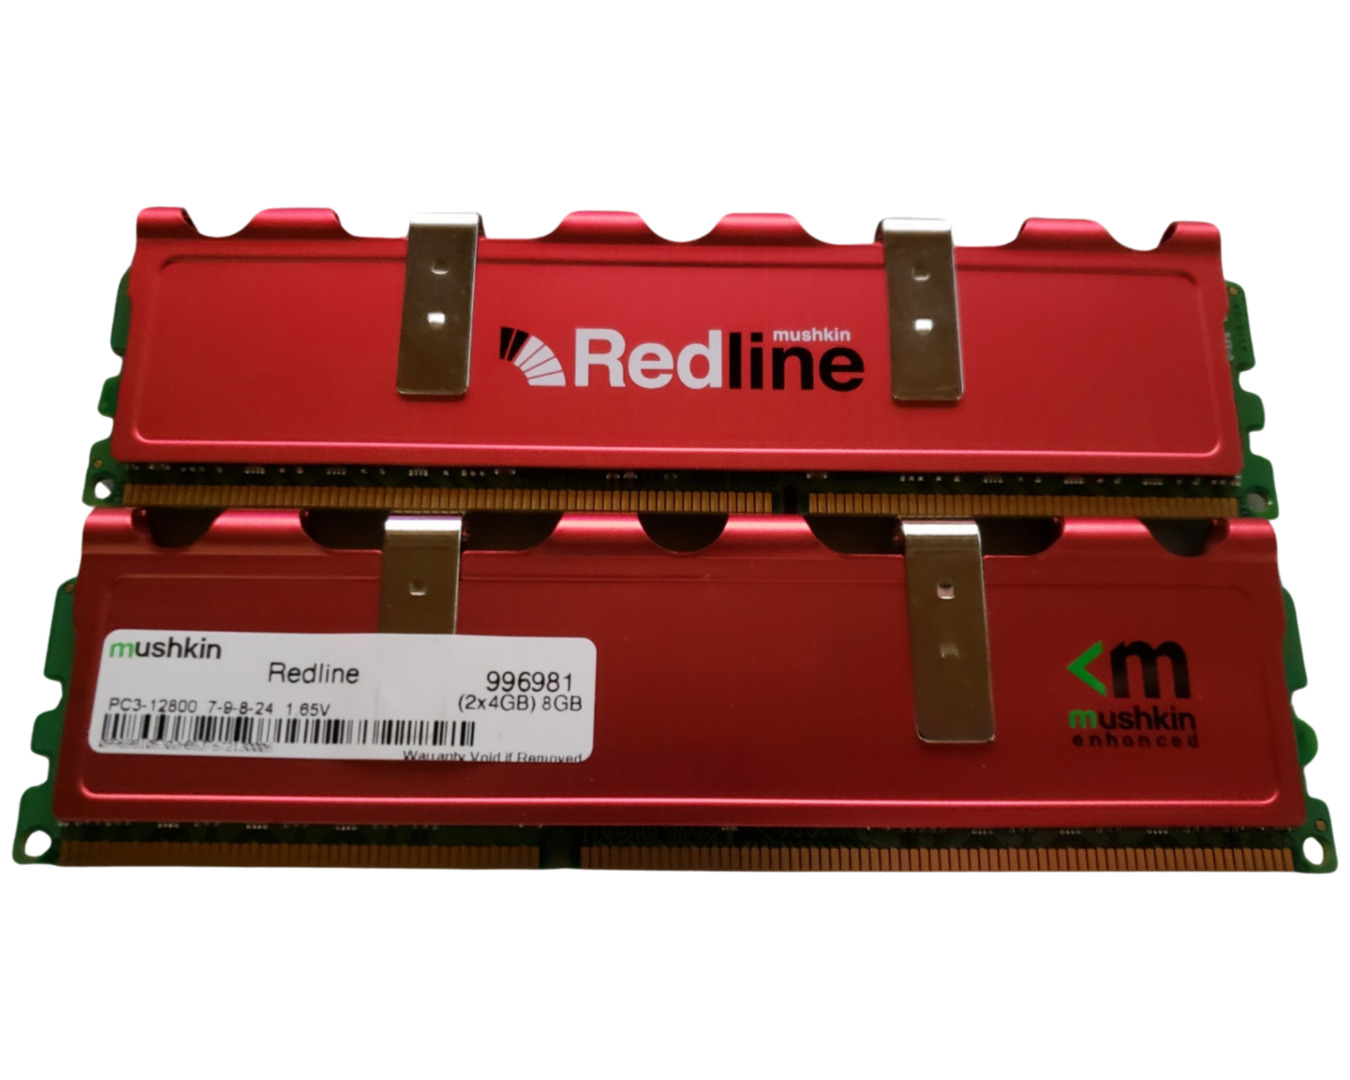 (2 Piece) Mushkin Enhanced Redline 996981 DDR3-1600 8GB (2x4GB) RAM